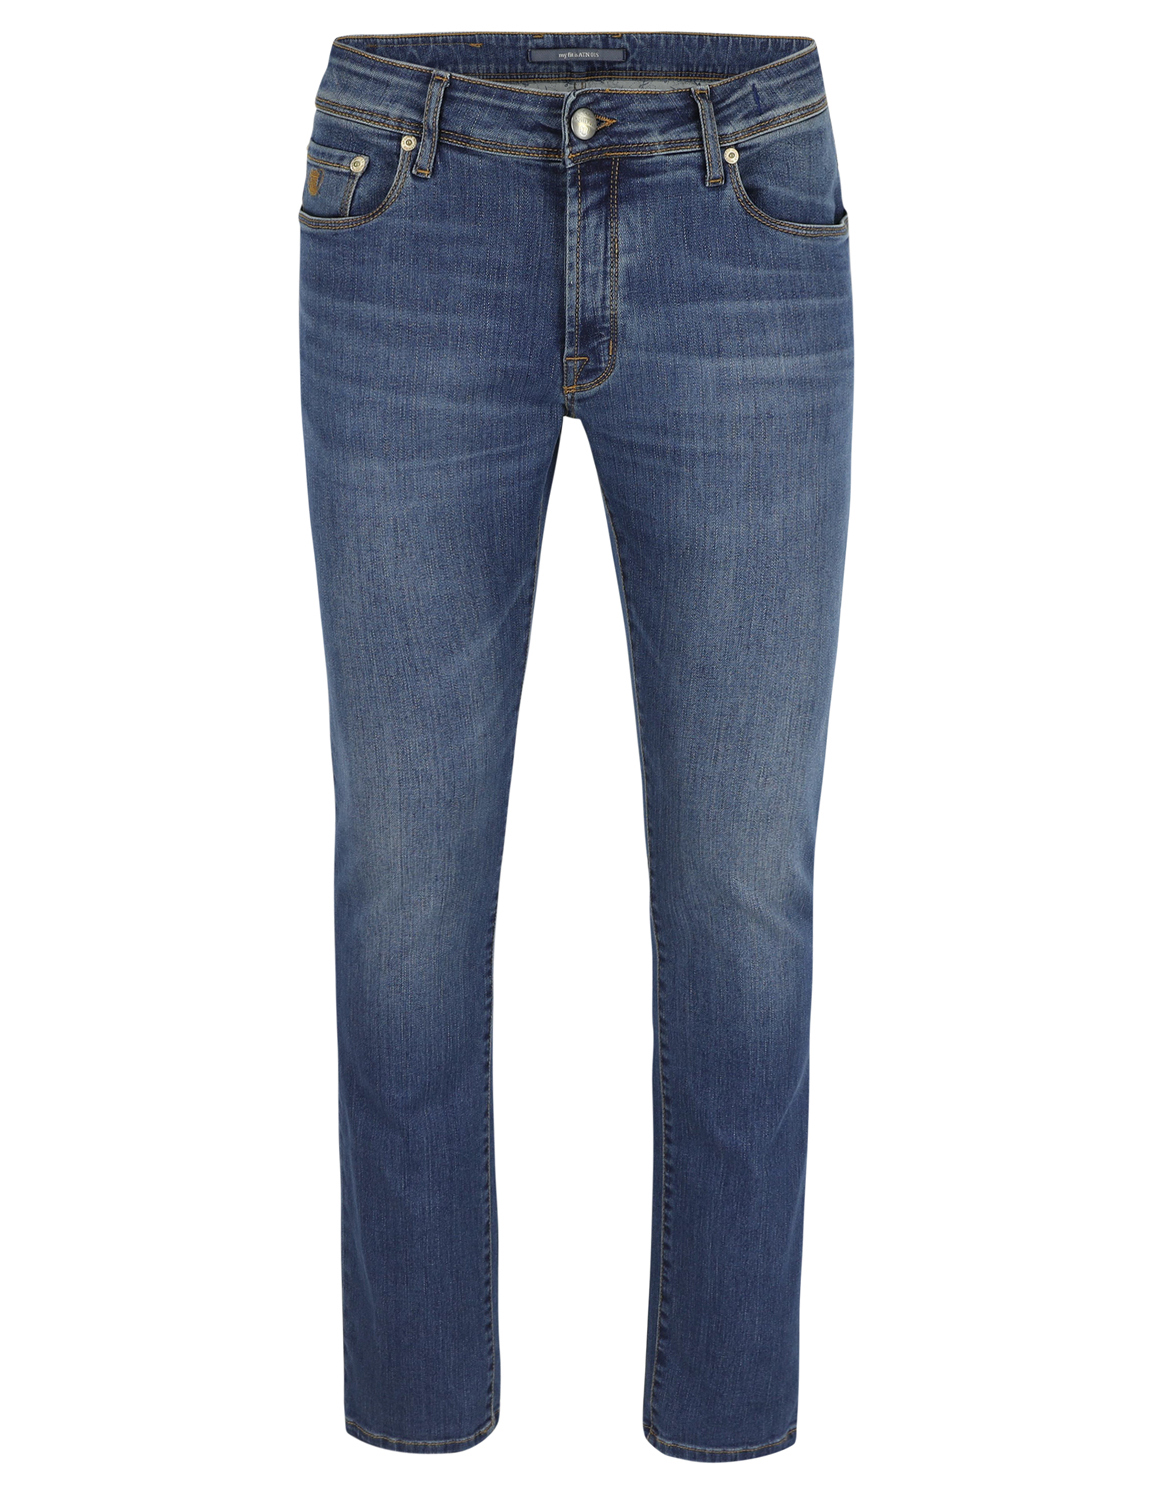 Atelier Noterman - Denim Slim Fit Jeans Donkerblauw - 31/32 - Heren